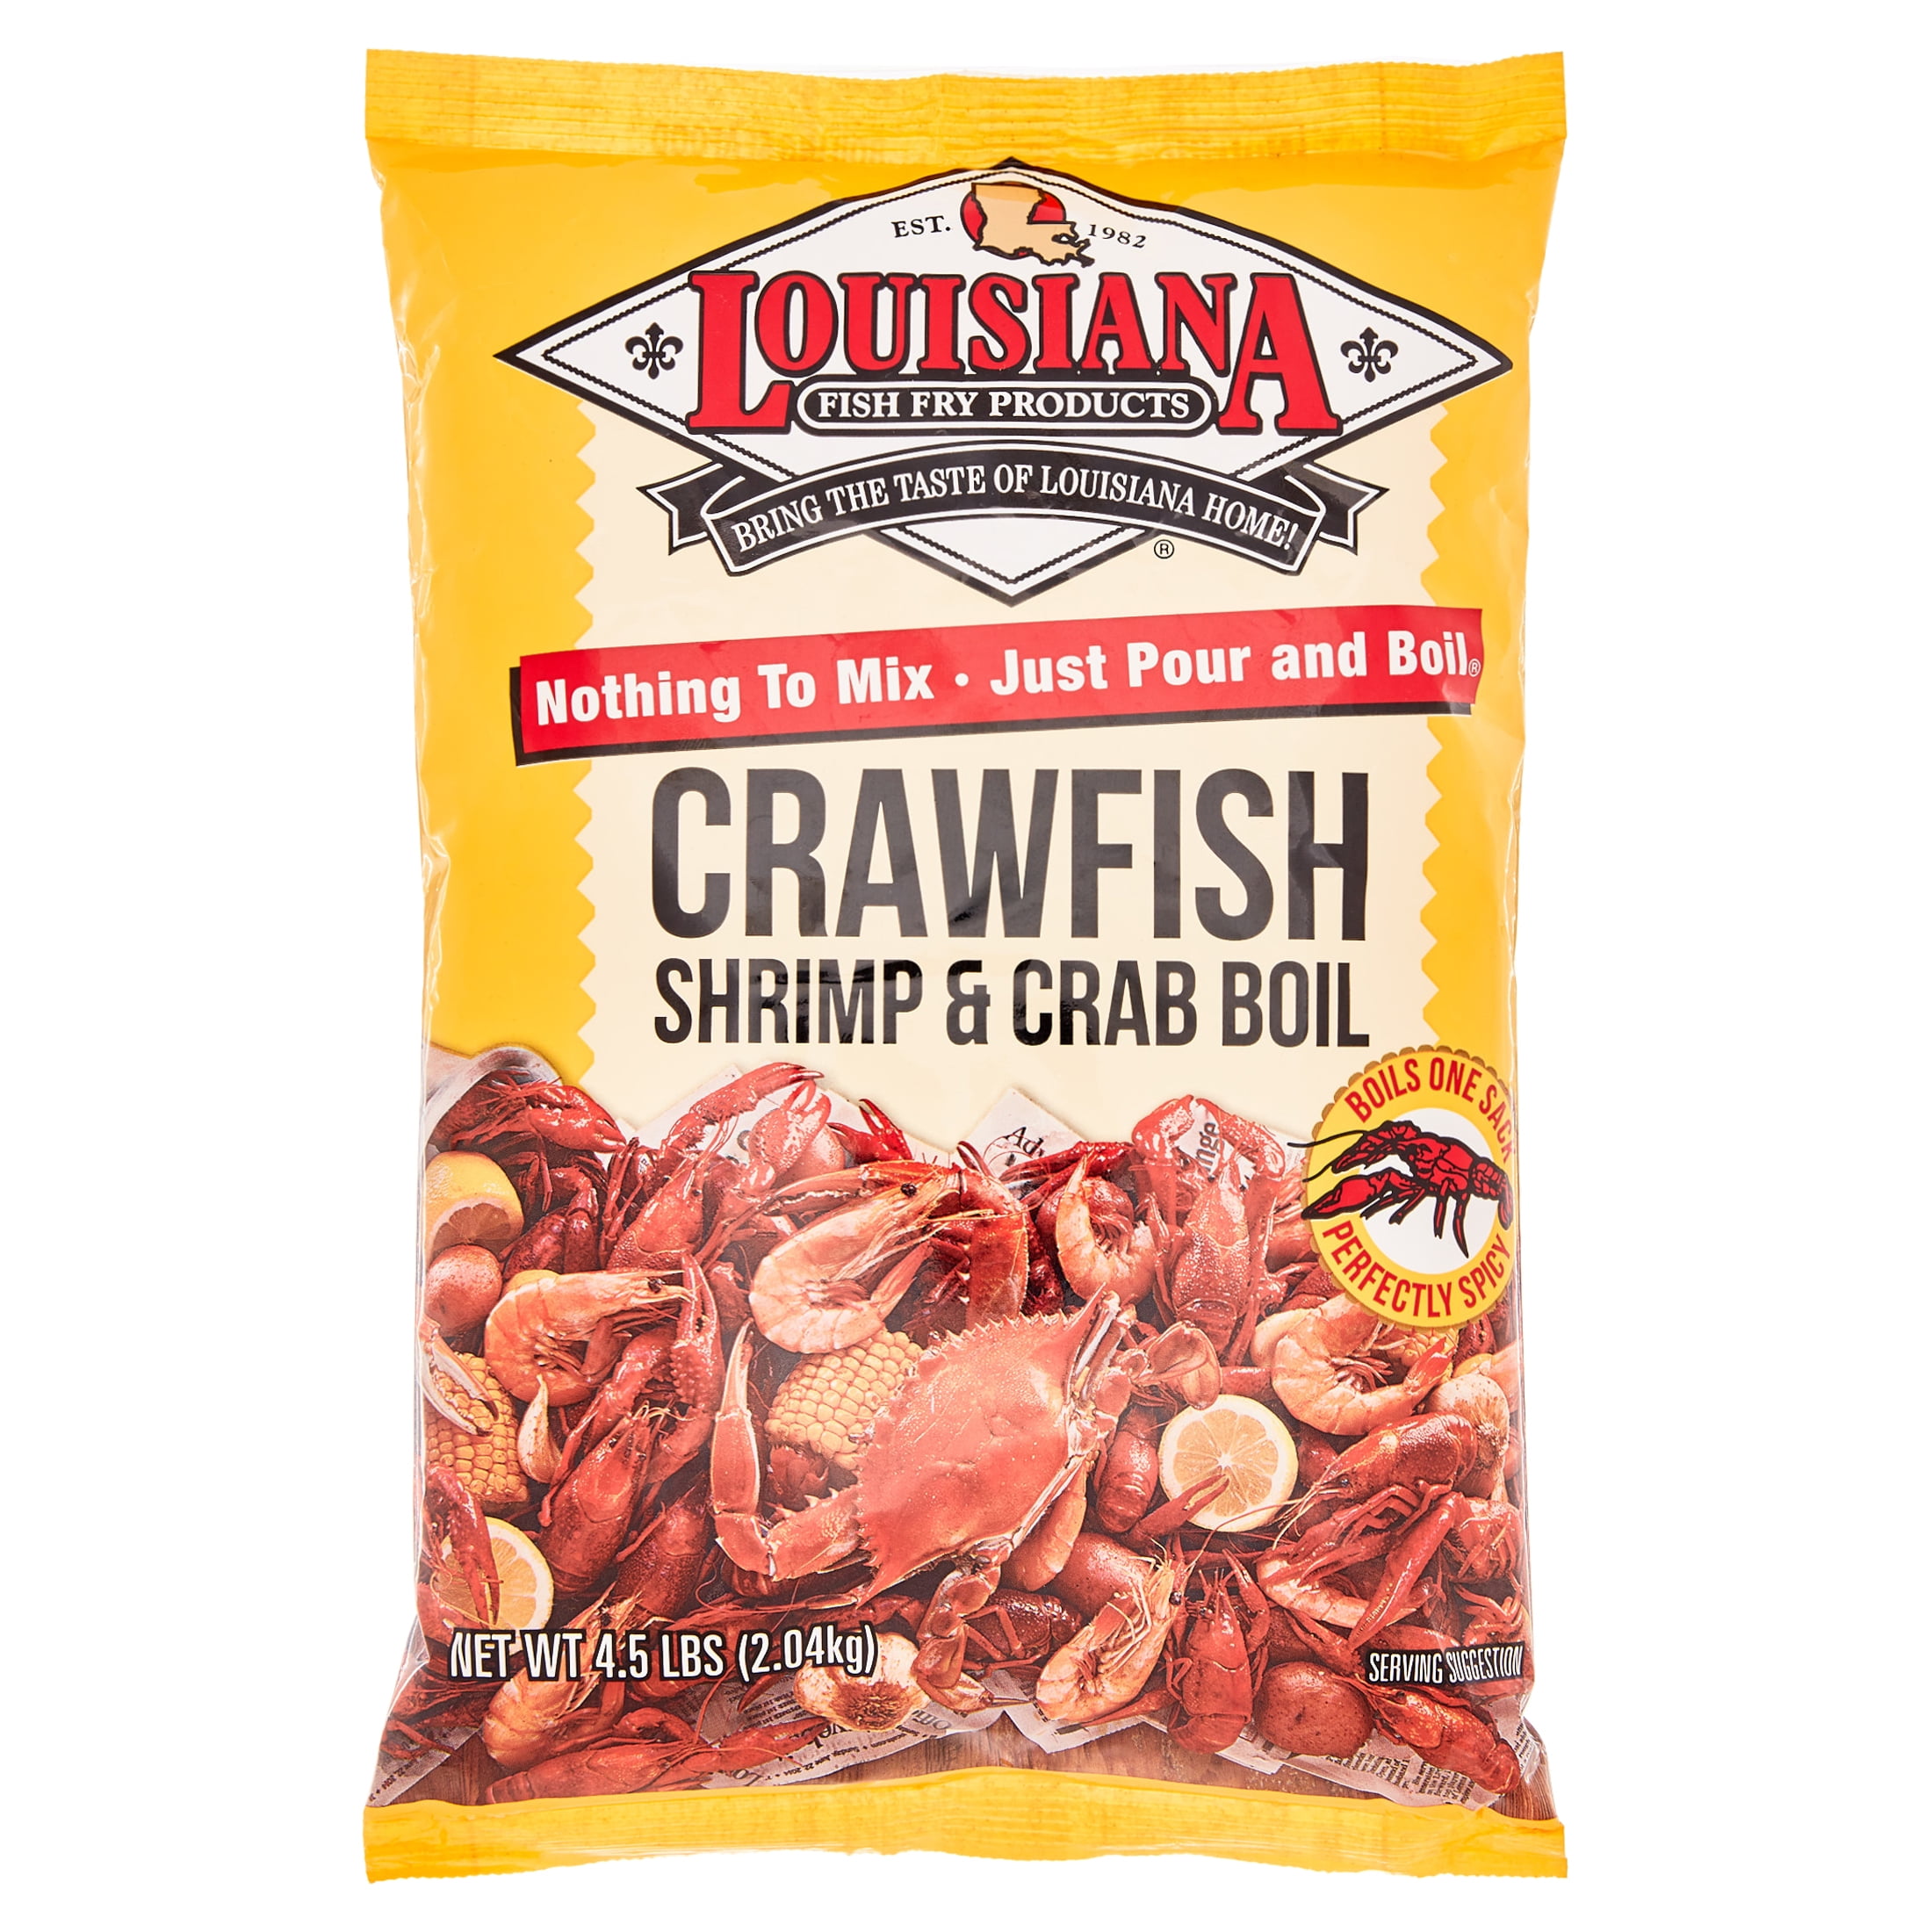 Louisiana Fish Fry Crawfish Shrimp & Crab Boil, 4.5 LB 